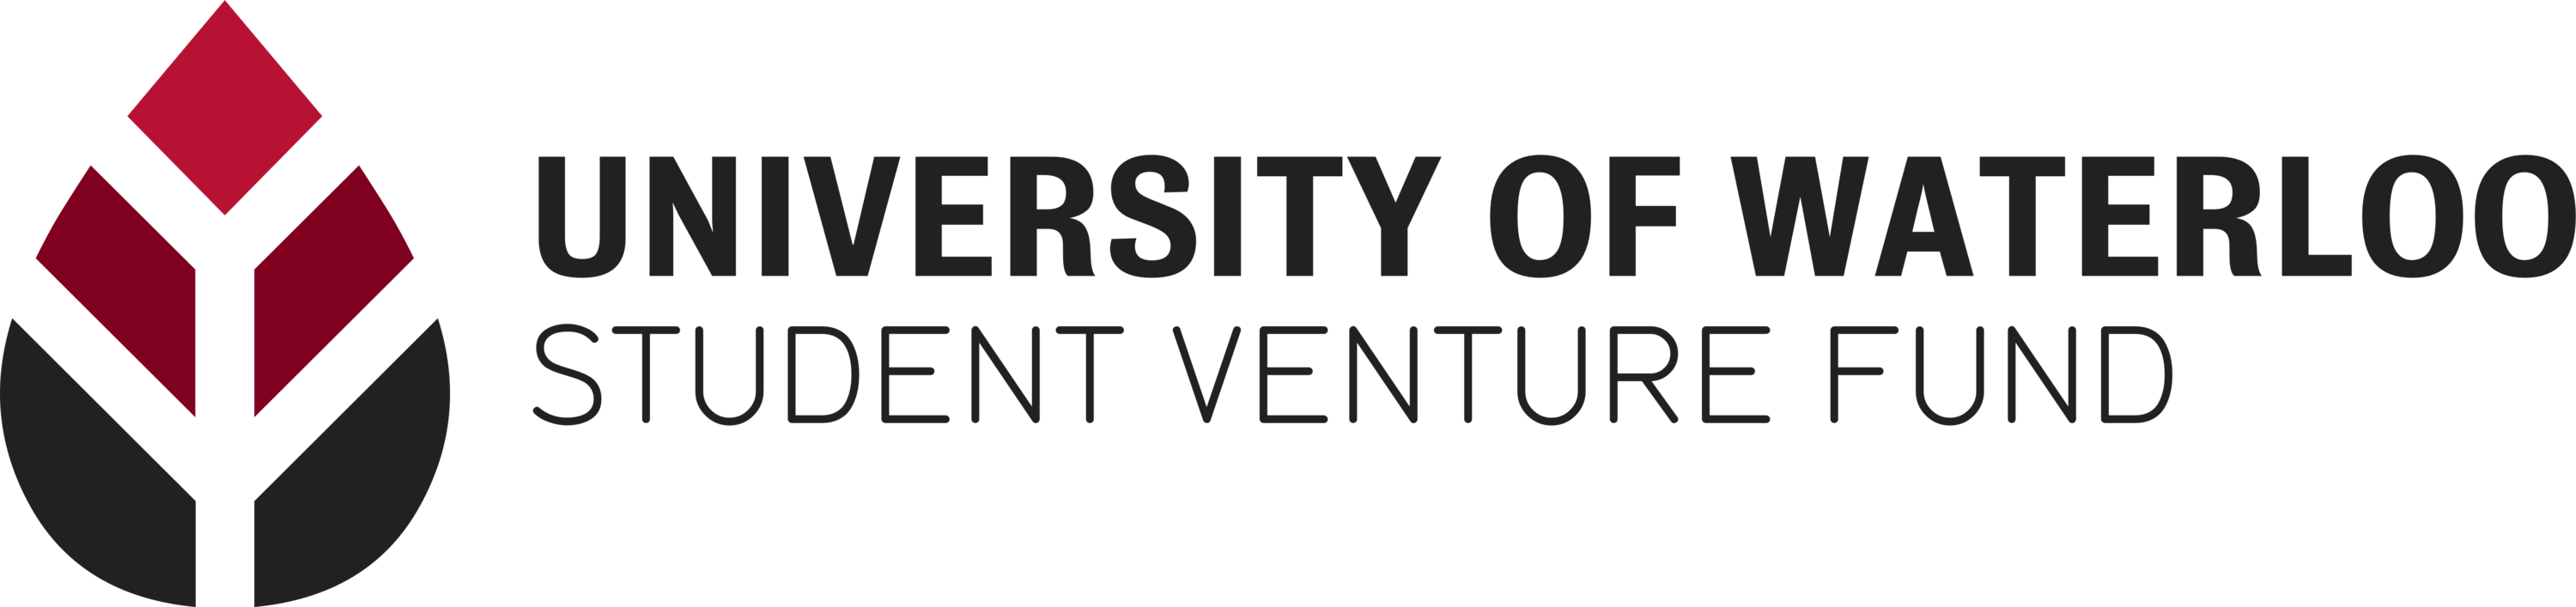 University of Waterloo Student Venture Fund Logo